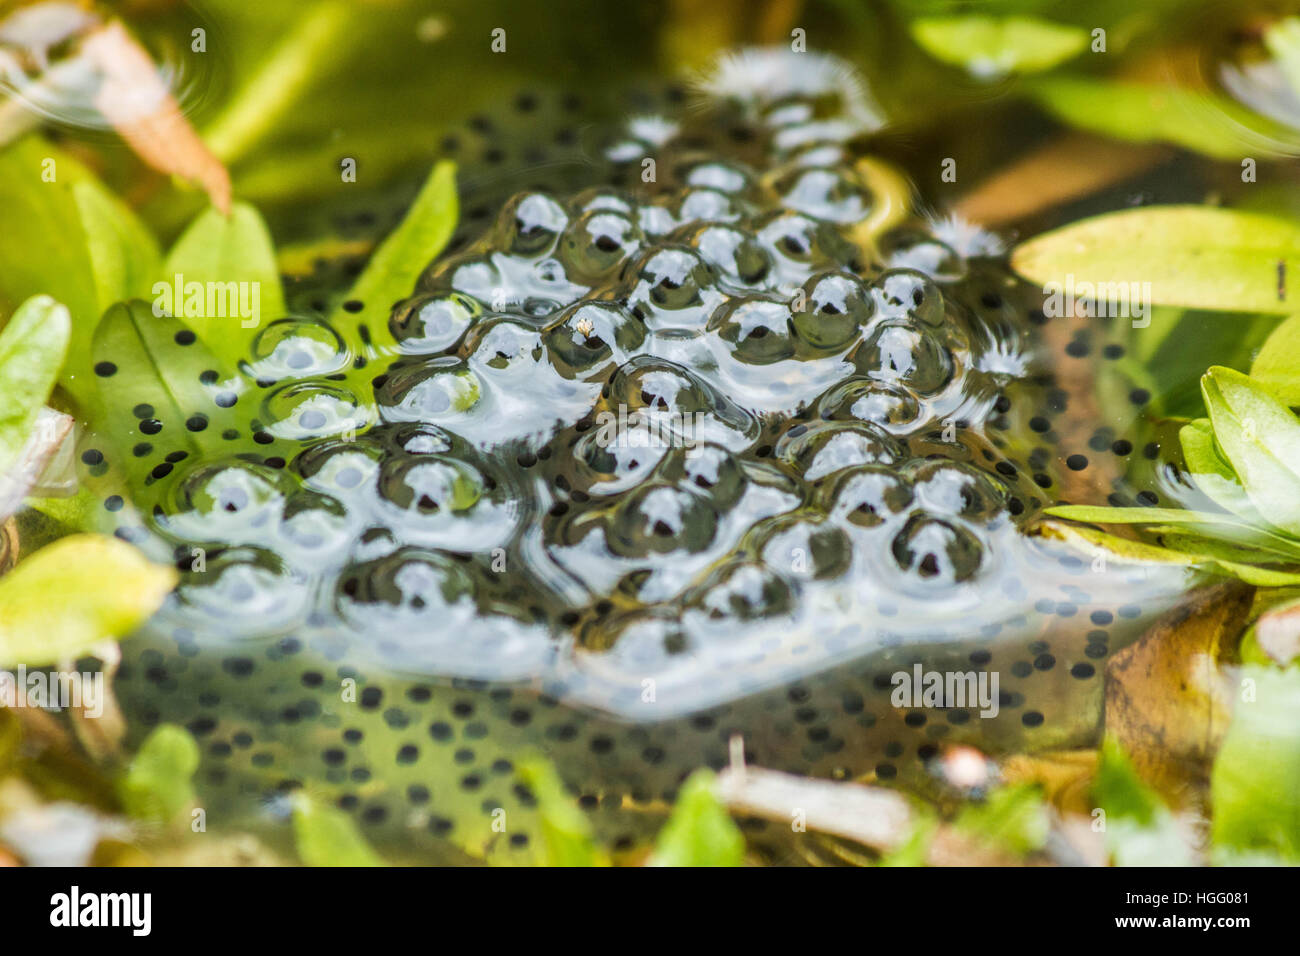 Bassin de jardin en commun frogspawn Banque D'Images